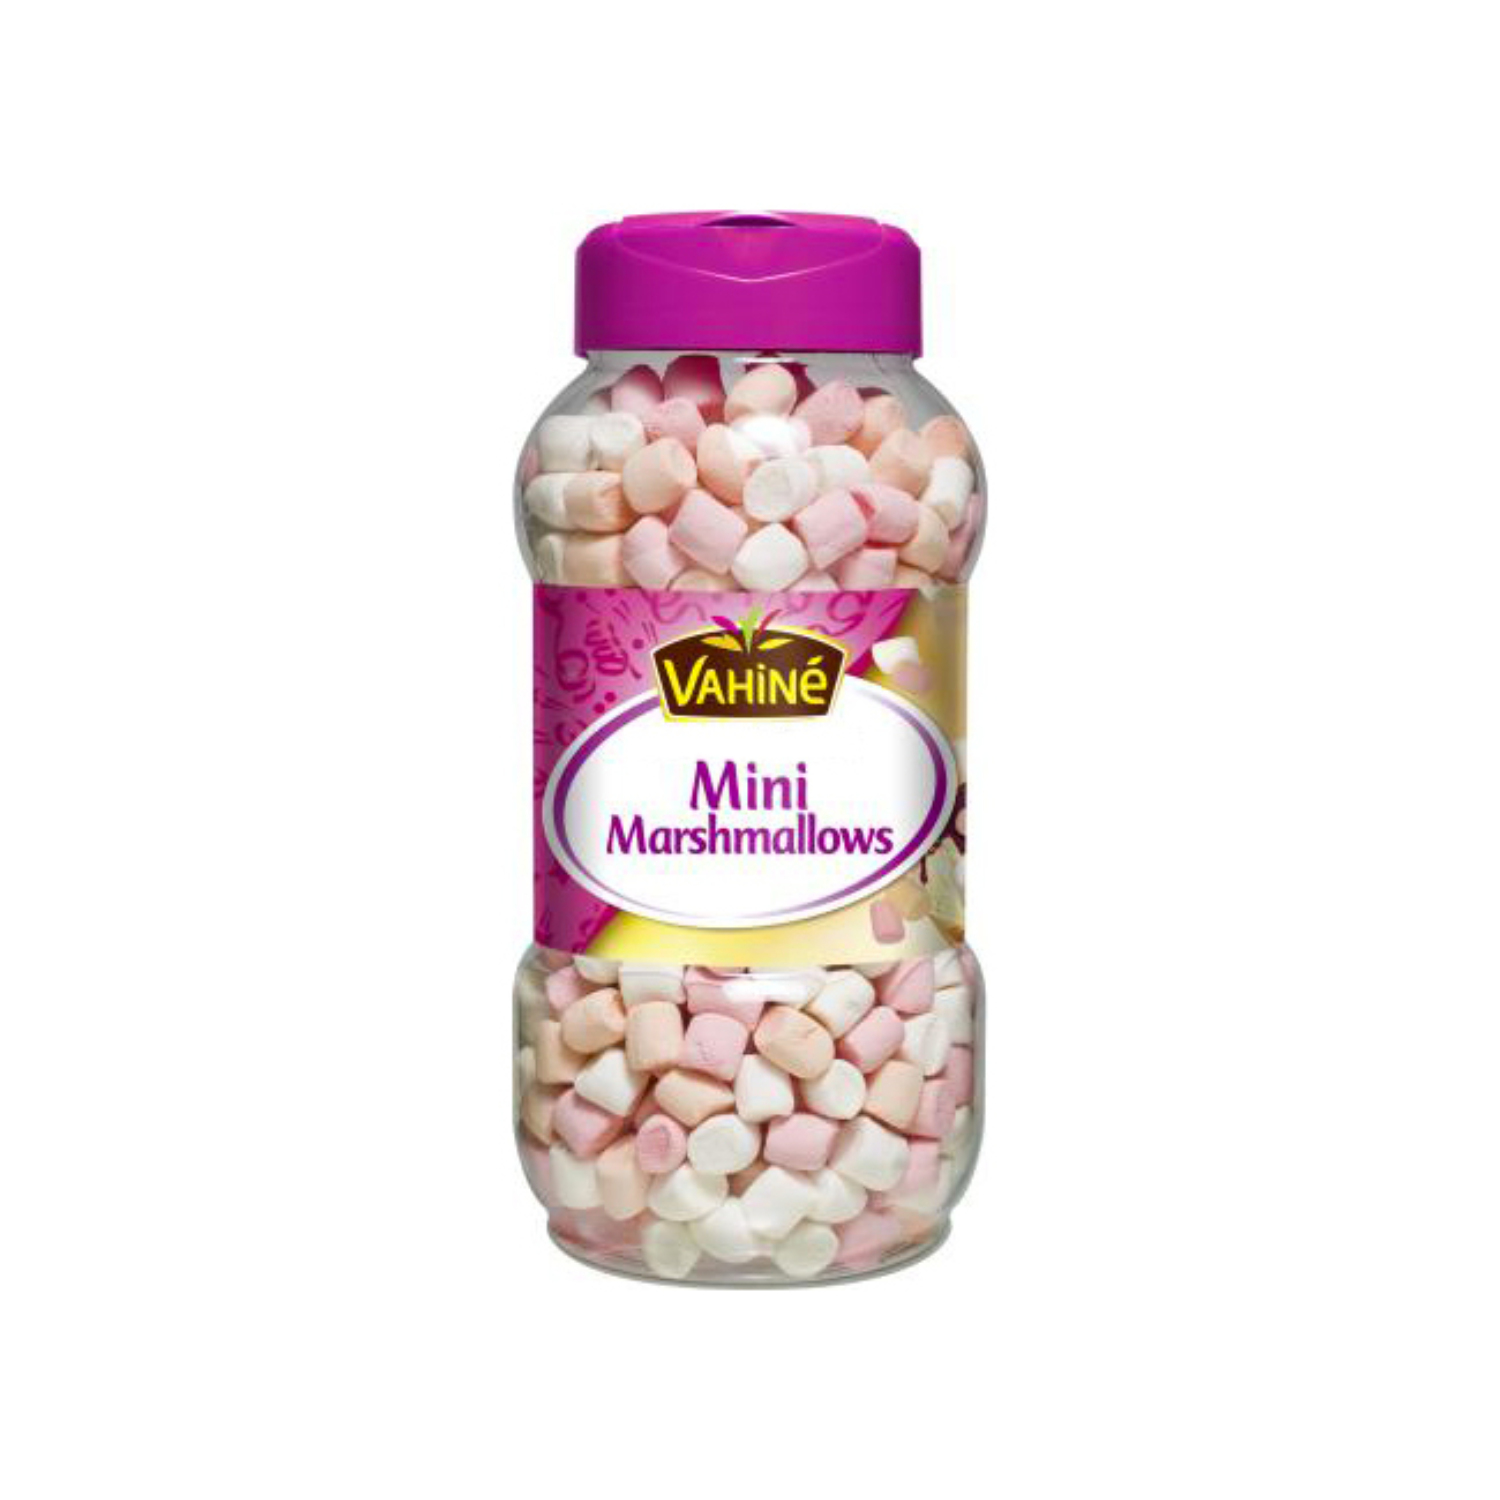 https://lecomptoirdelapatisserie.com/files/picture/5f5029f5/mini-chamallows-mini-marshmallows-vahine-le-comptoir-de-la-patisserie-1500-0.jpg